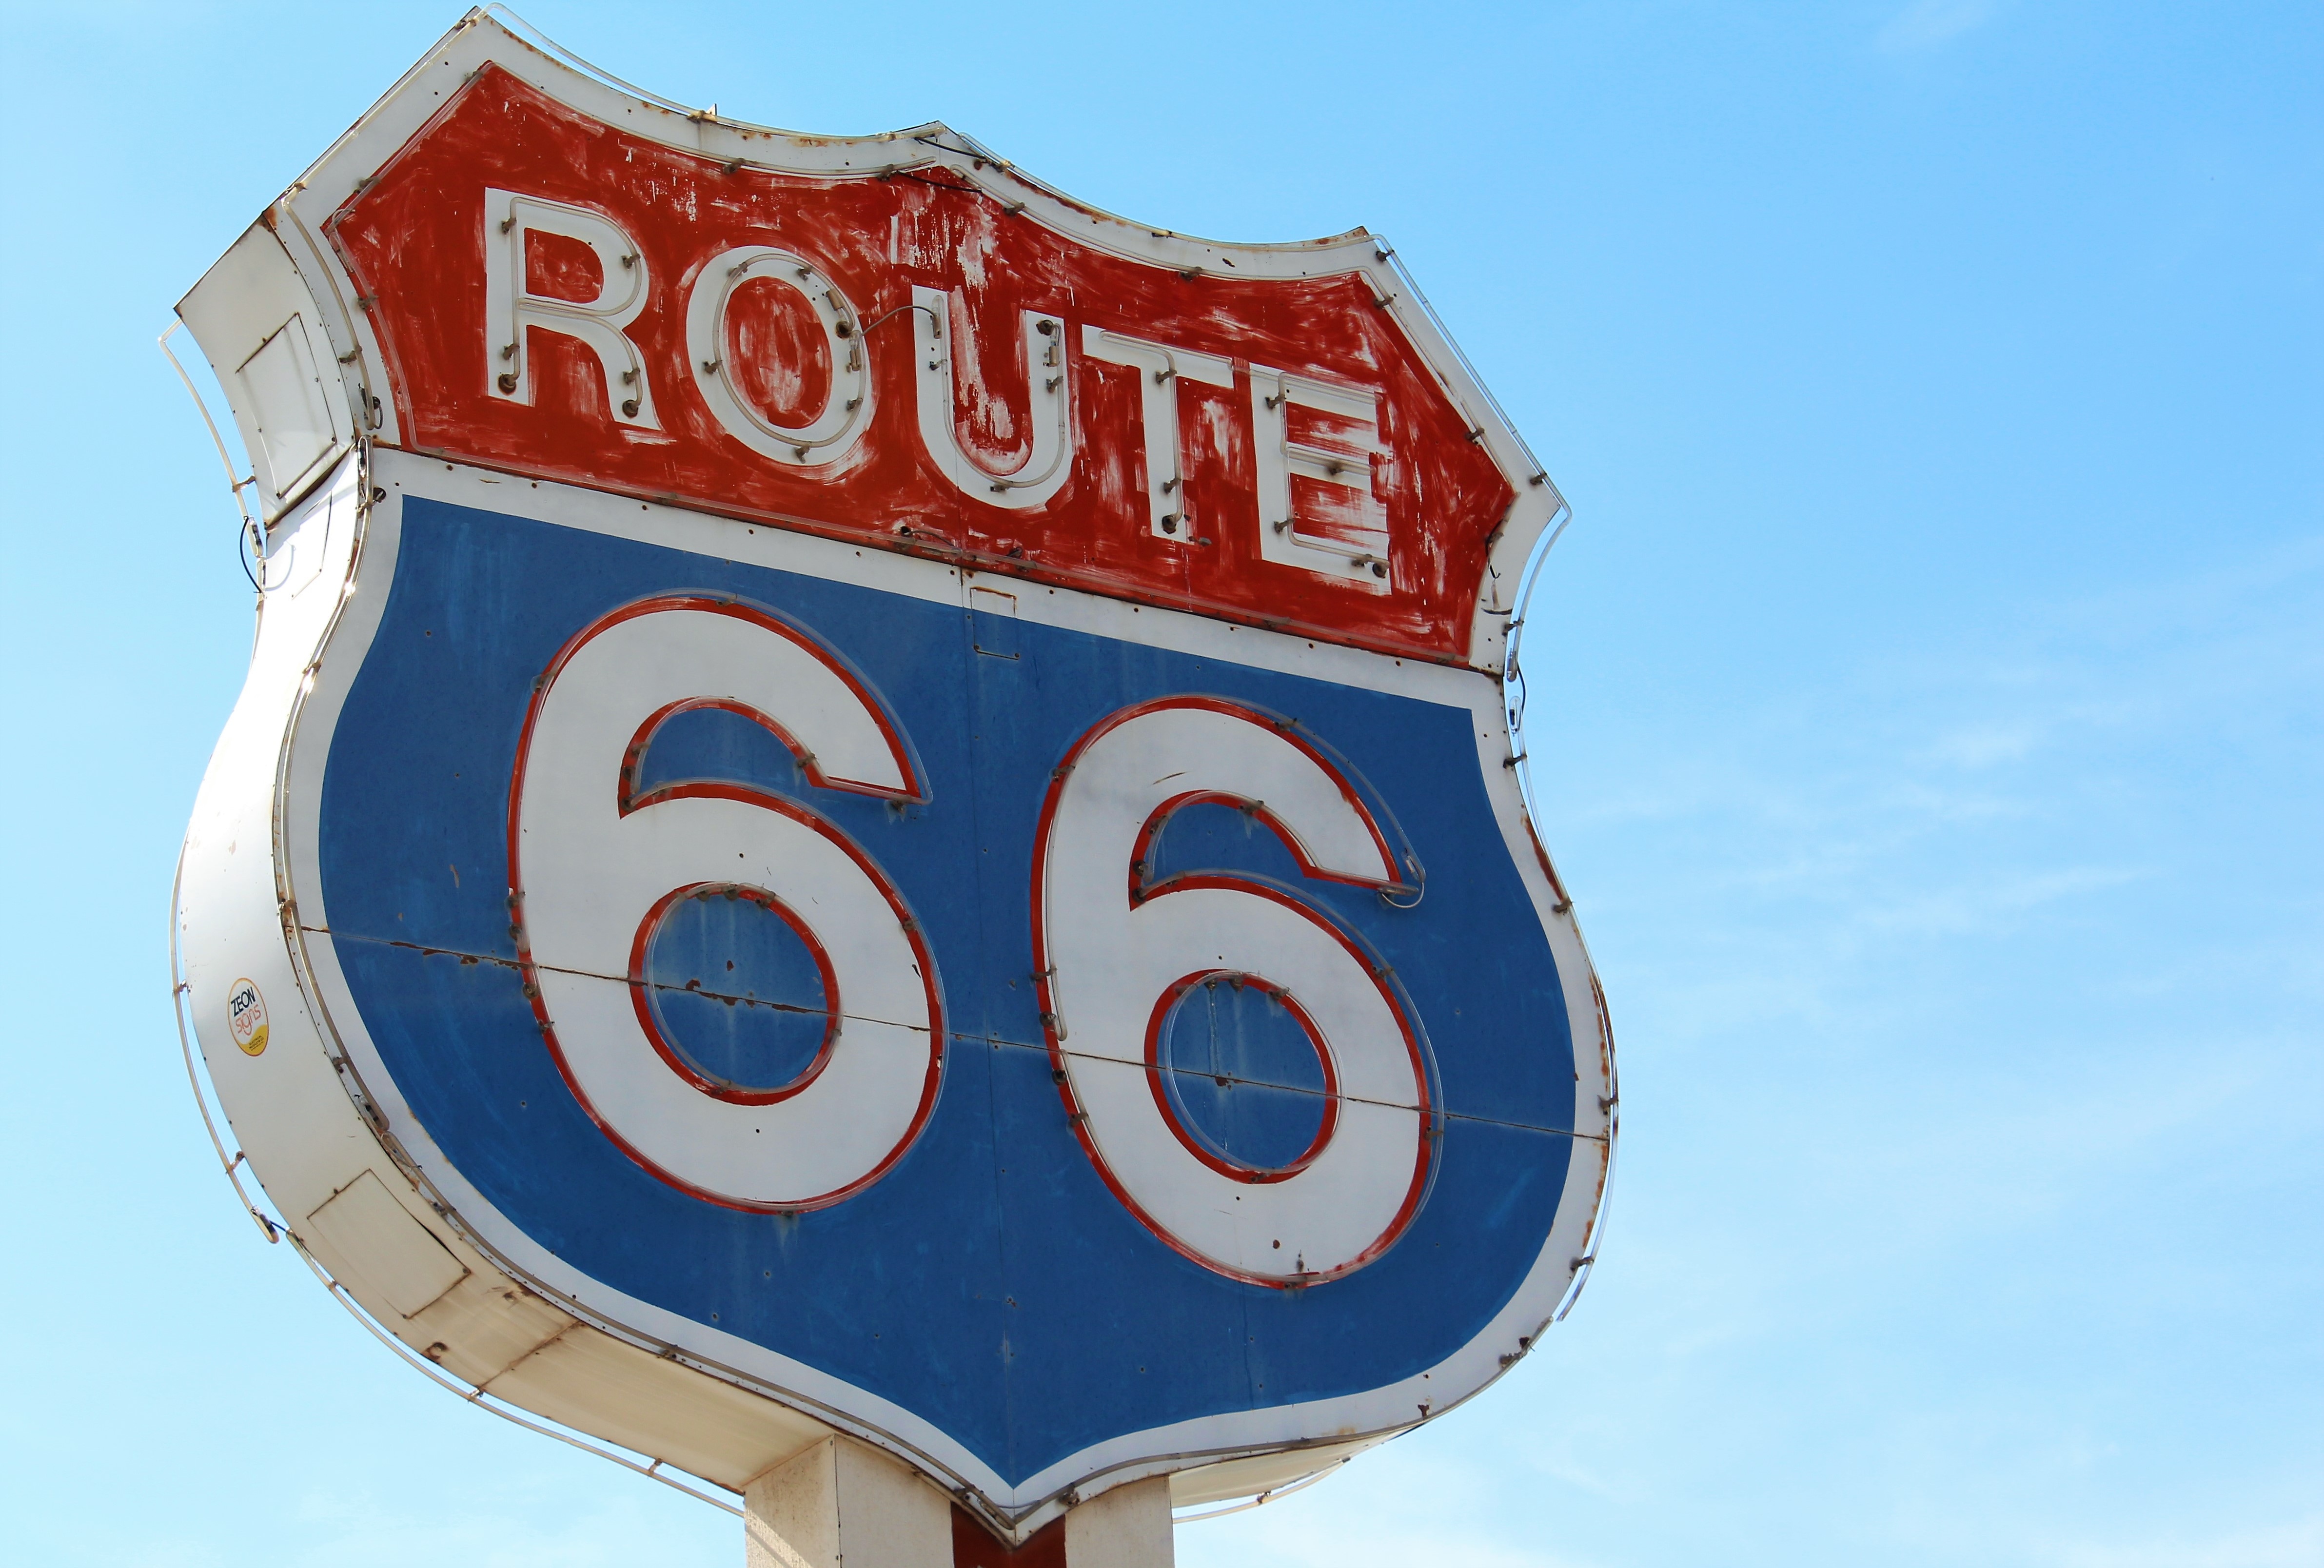 Route 66 Historic District